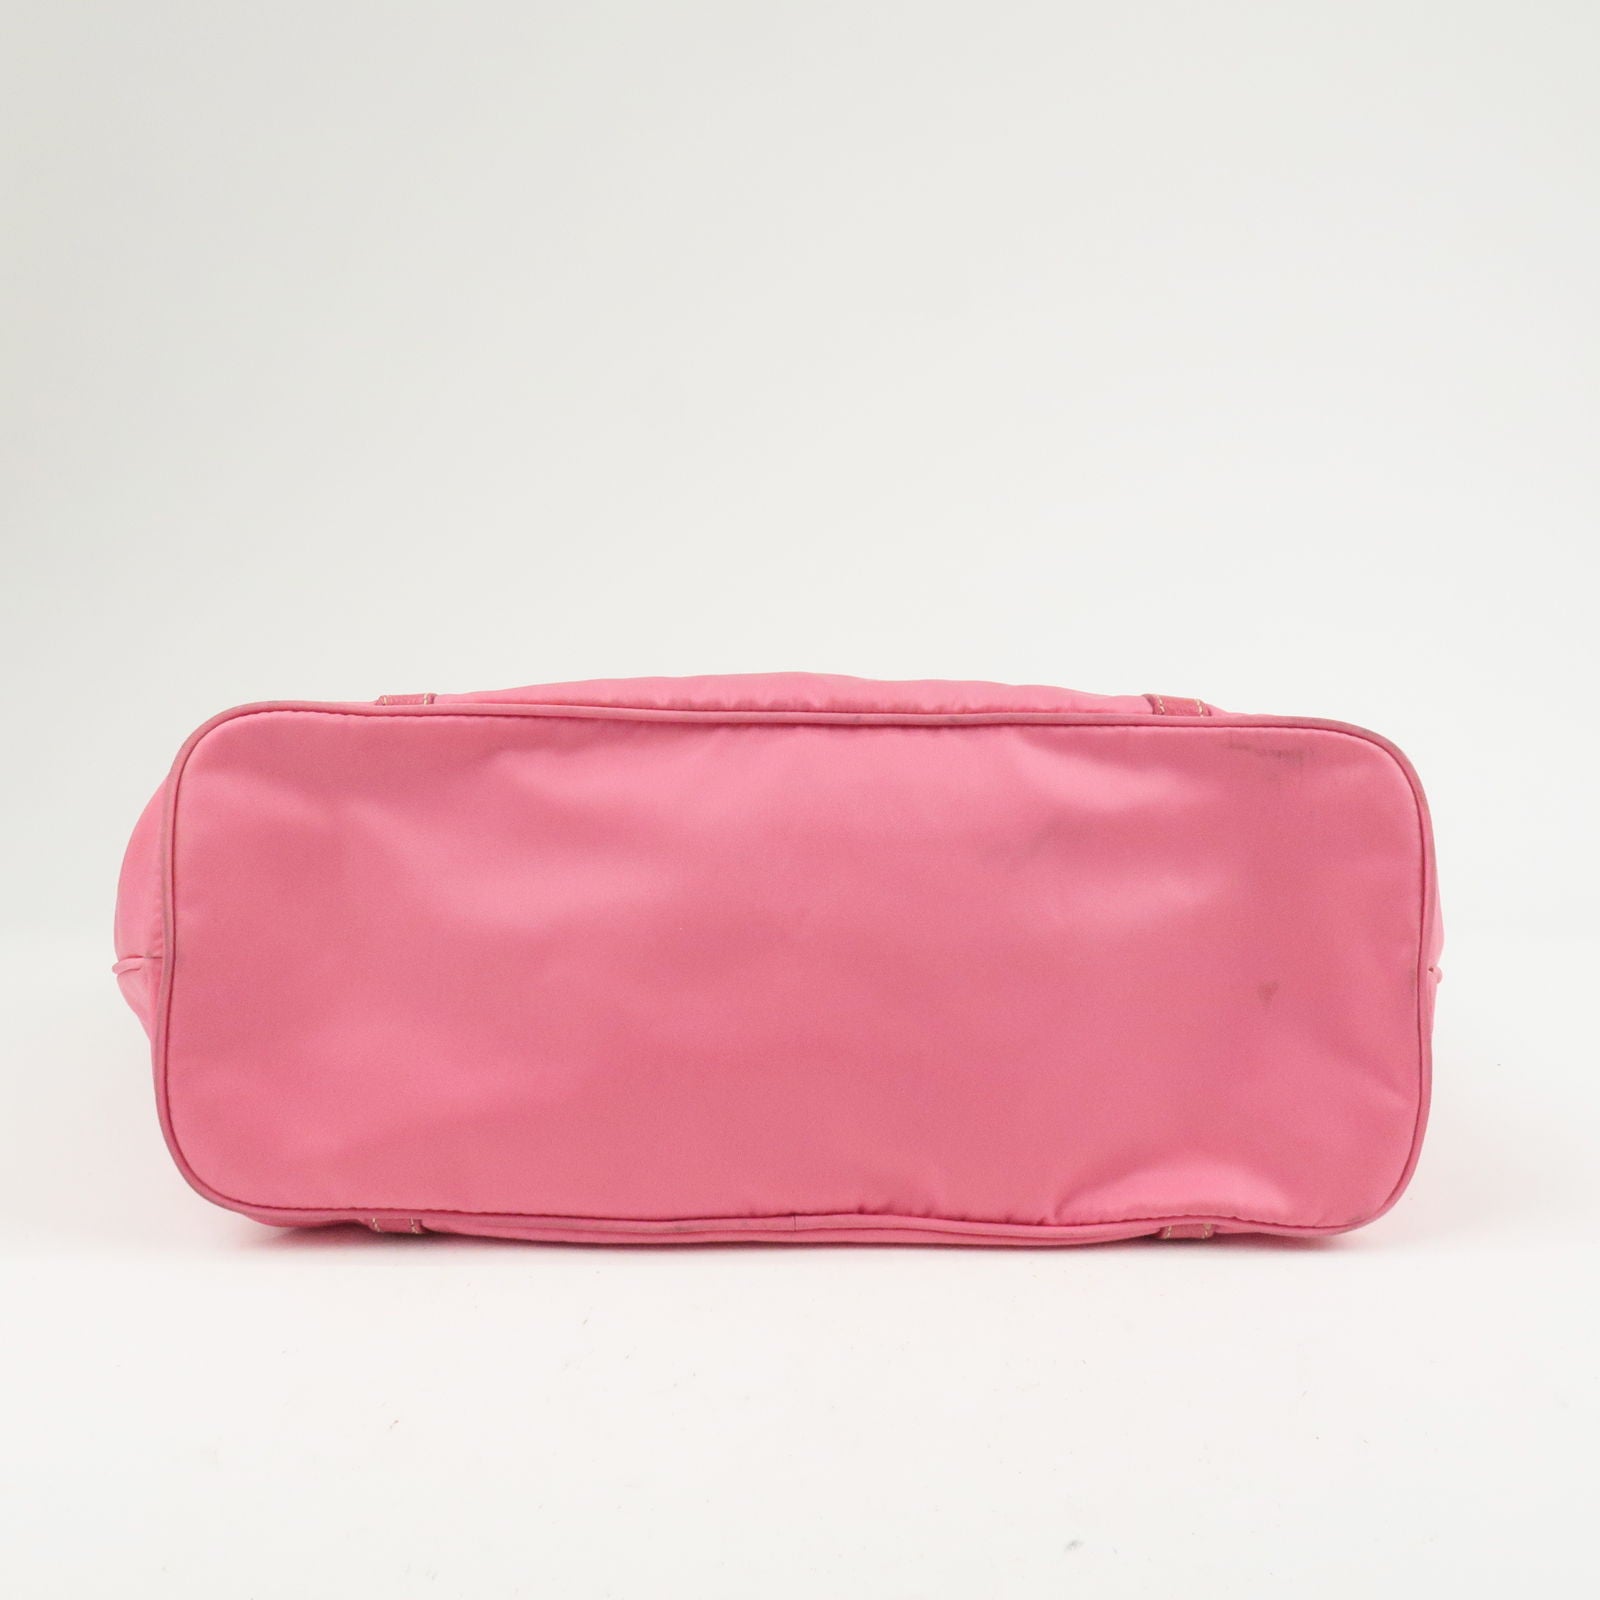 Preowned Authentic Prada 2WAY Mini Boston Pink Bag